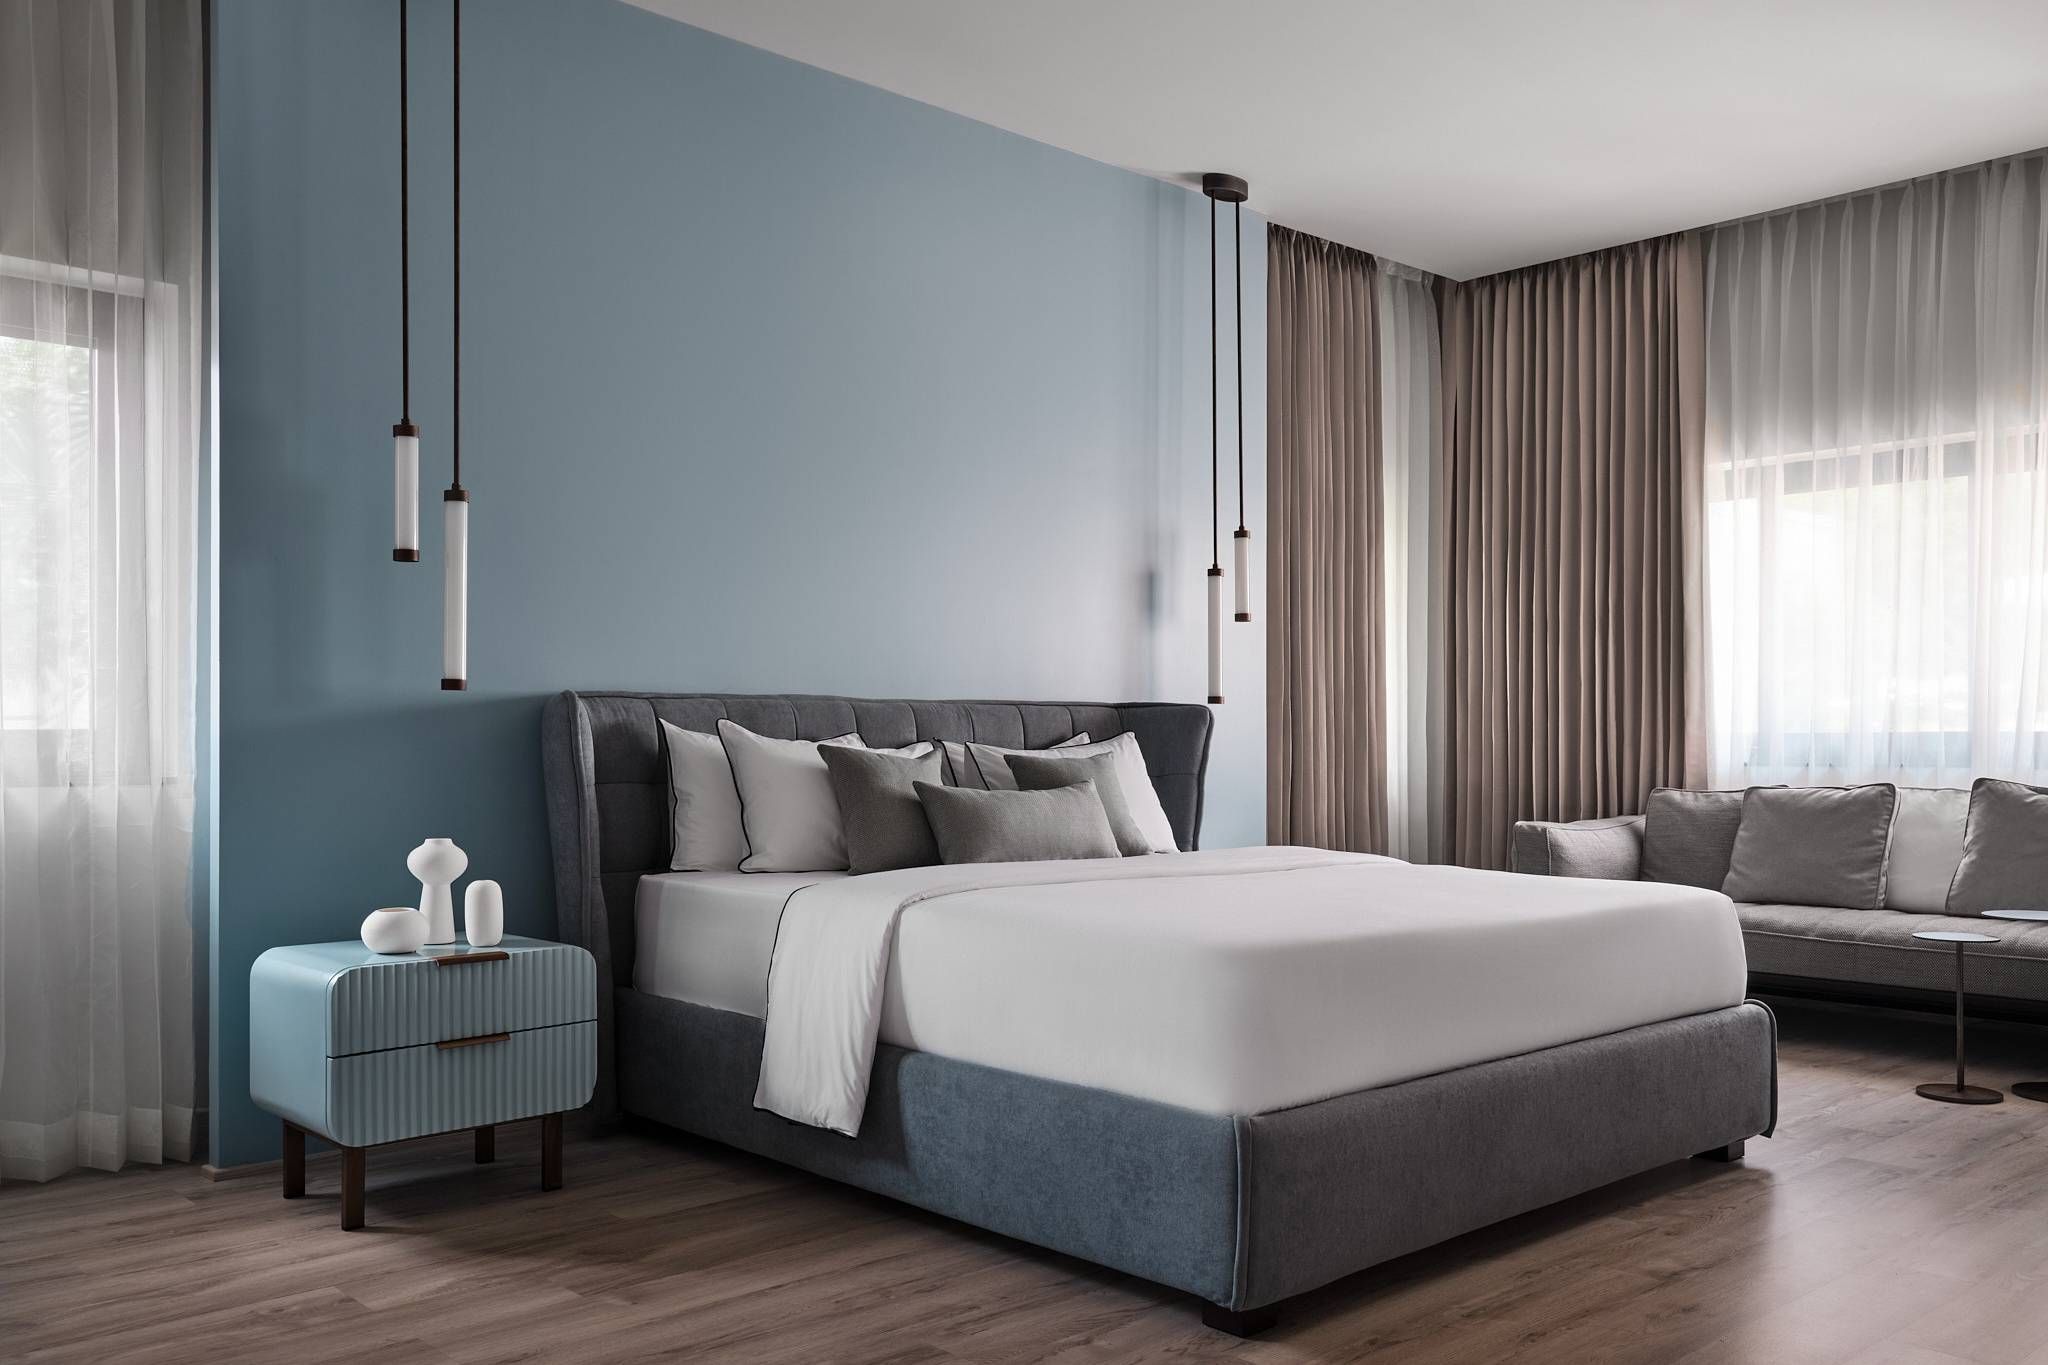 Spacious Guest Bedroom Design With Drop Lights | Livspace